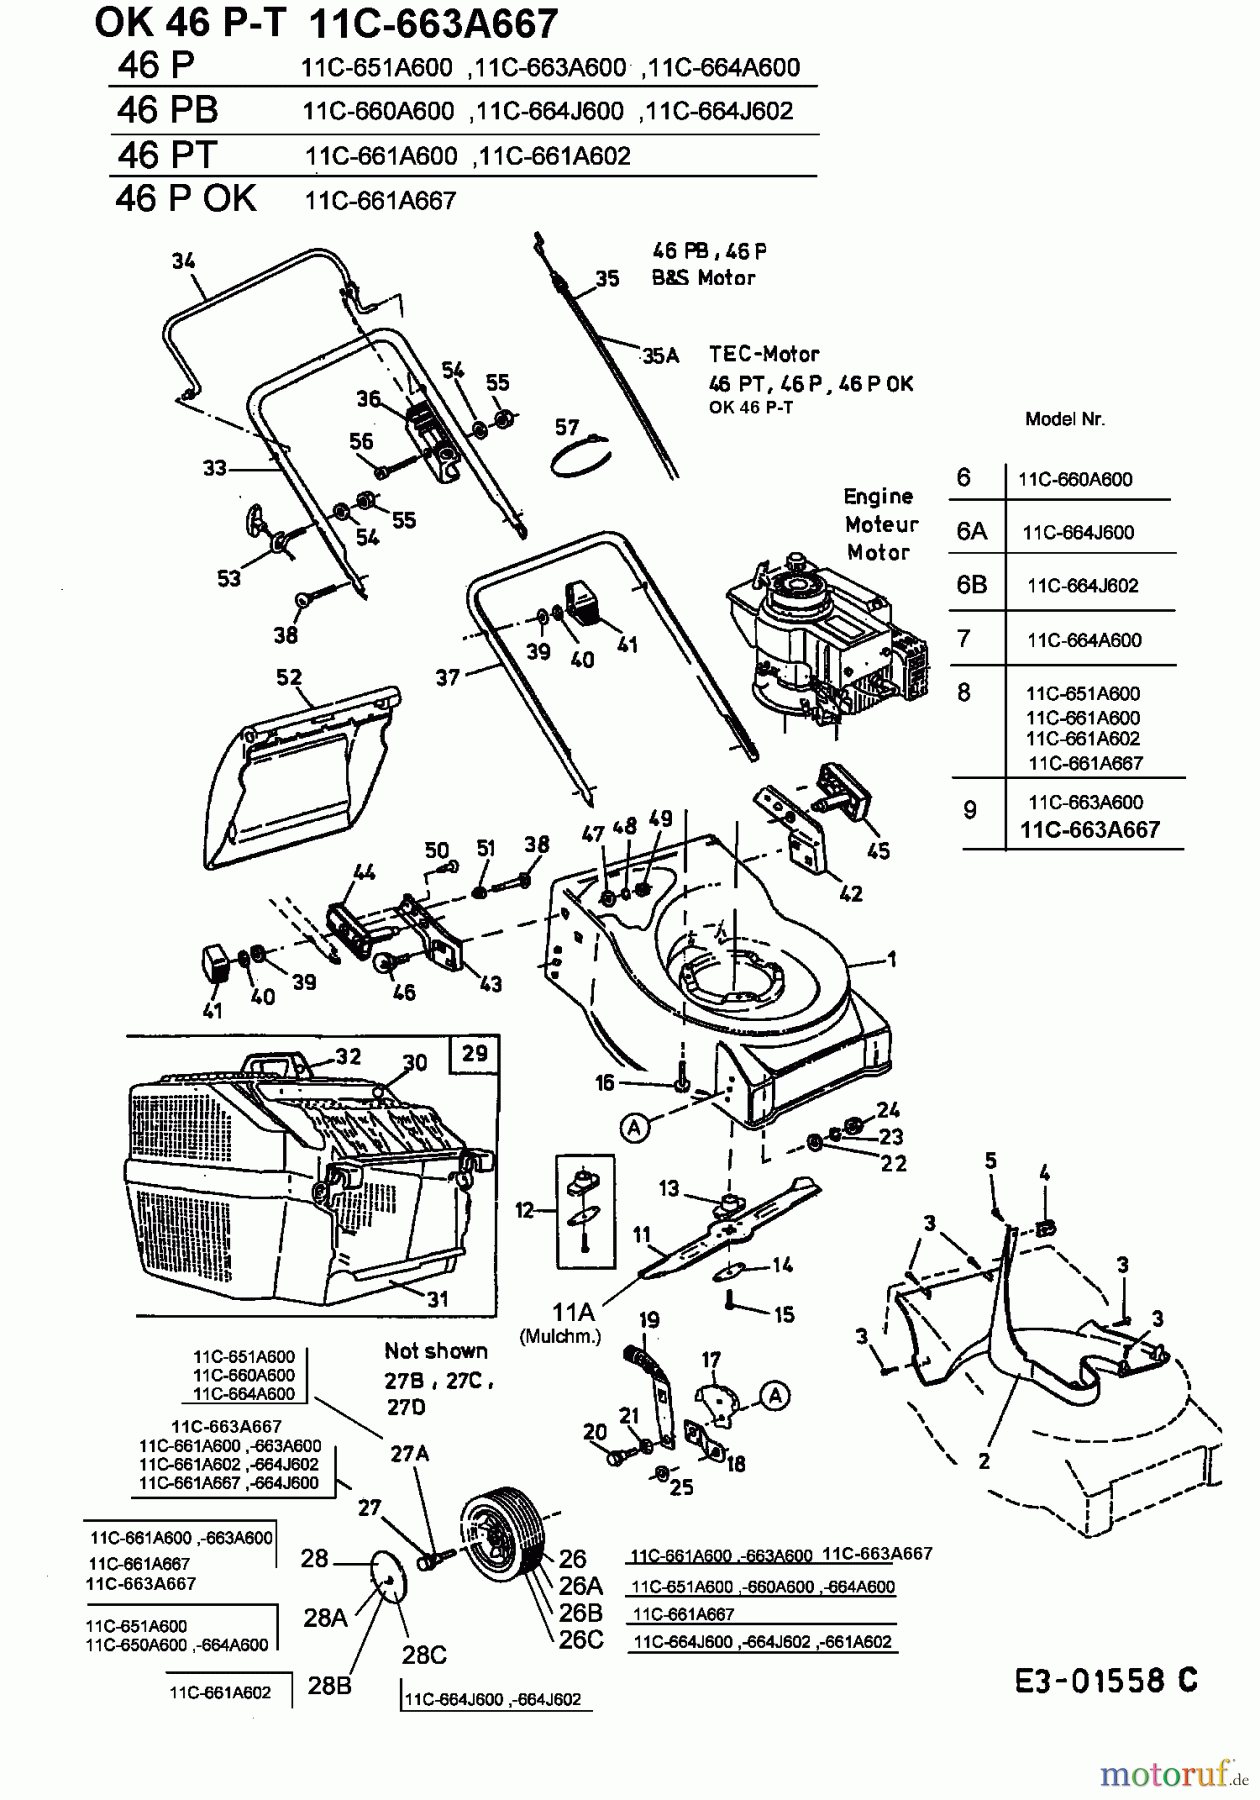  MTD Petrol mower 46 PT 11C-661A602  (2003) Basic machine